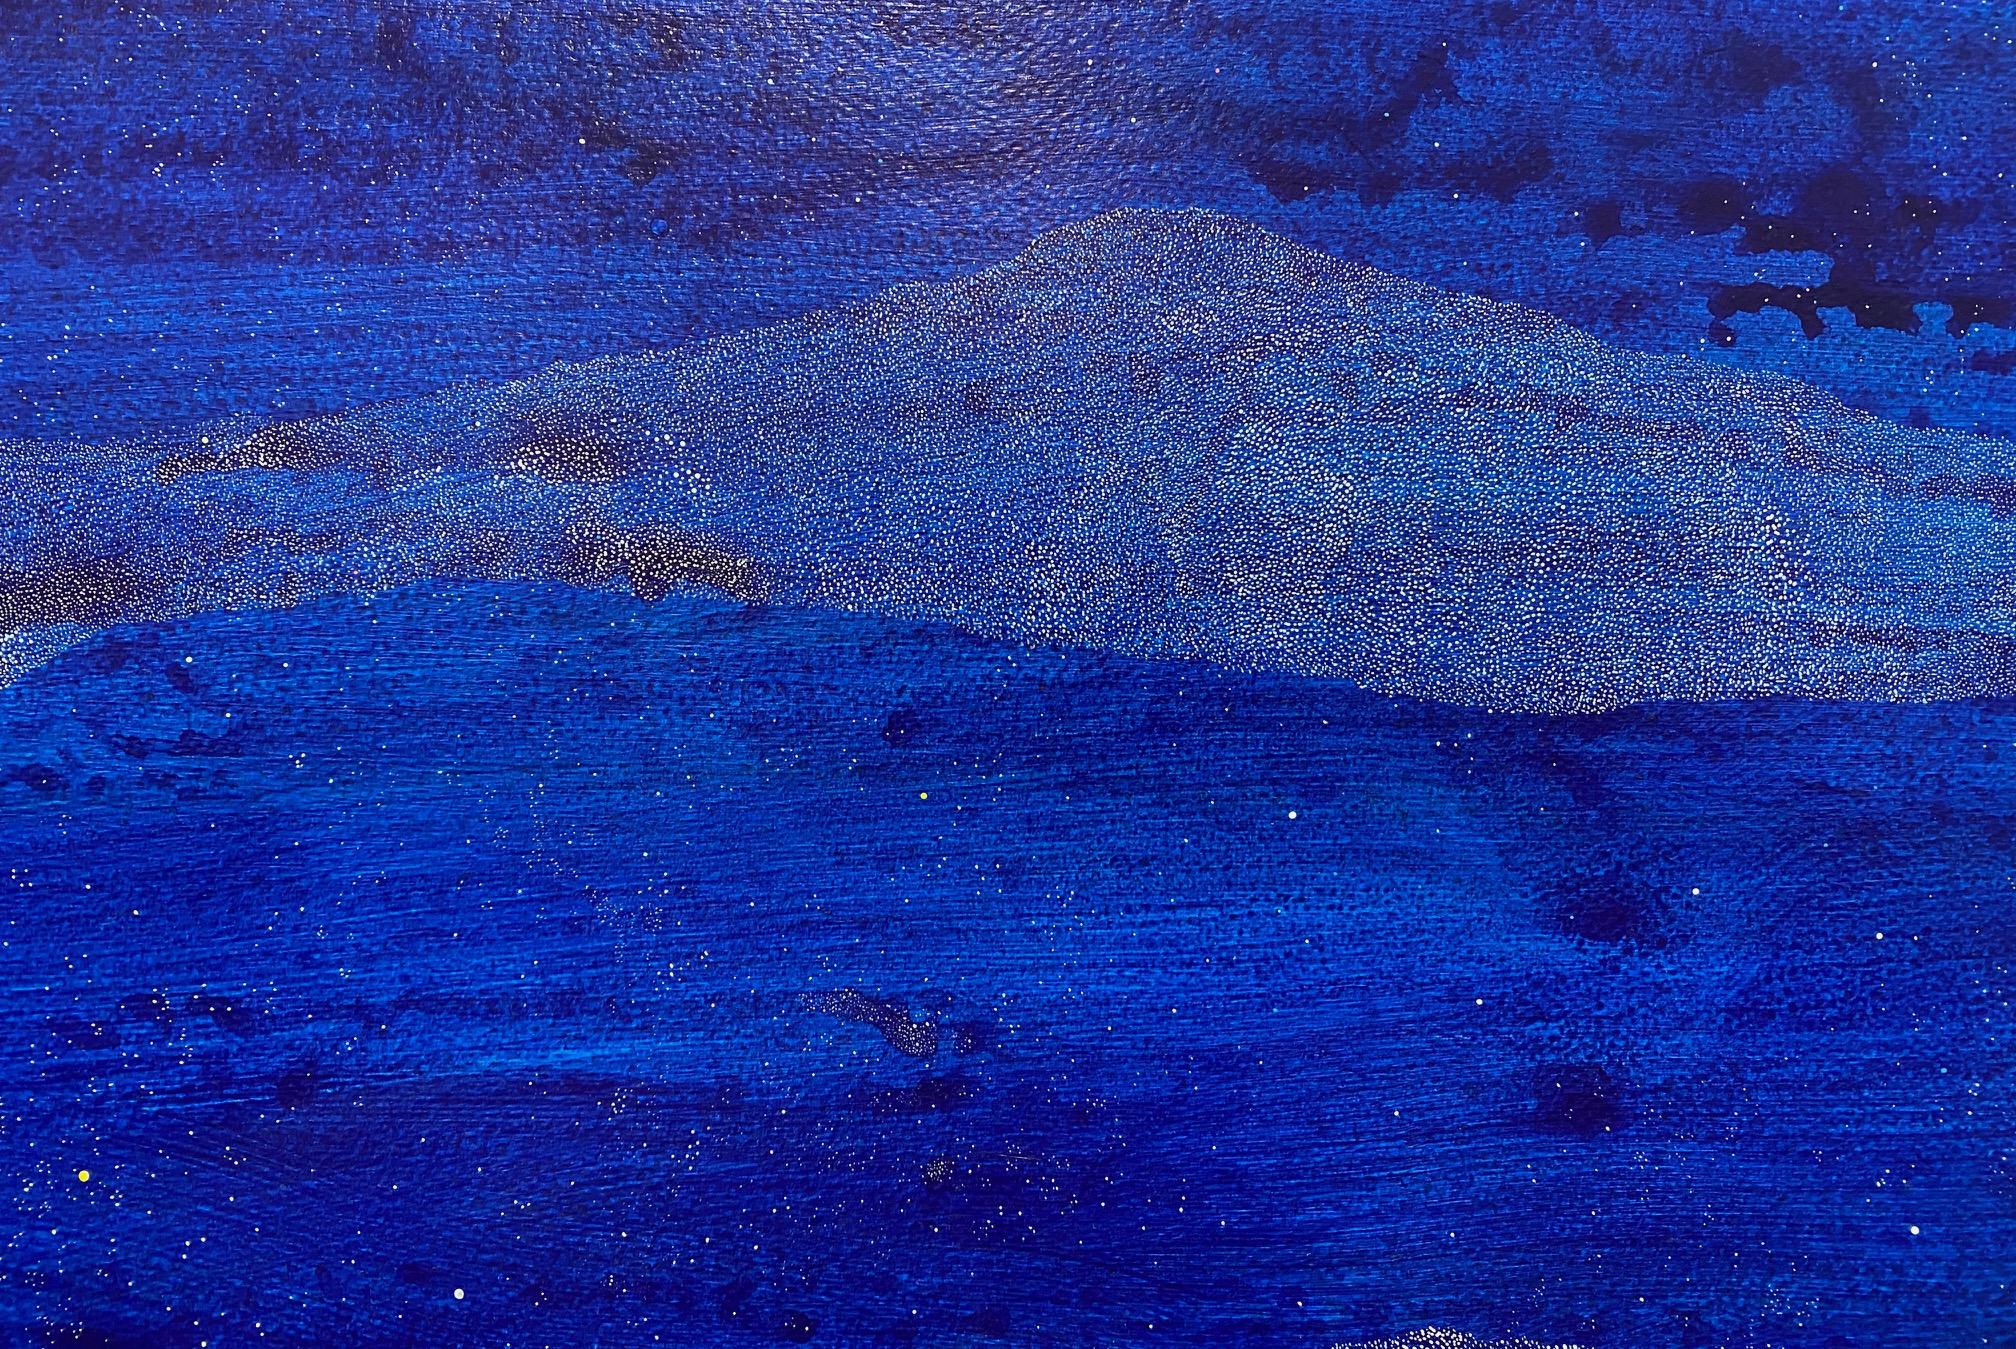 Ocean Nocturne - Blue Landscape Painting by James Isherwood